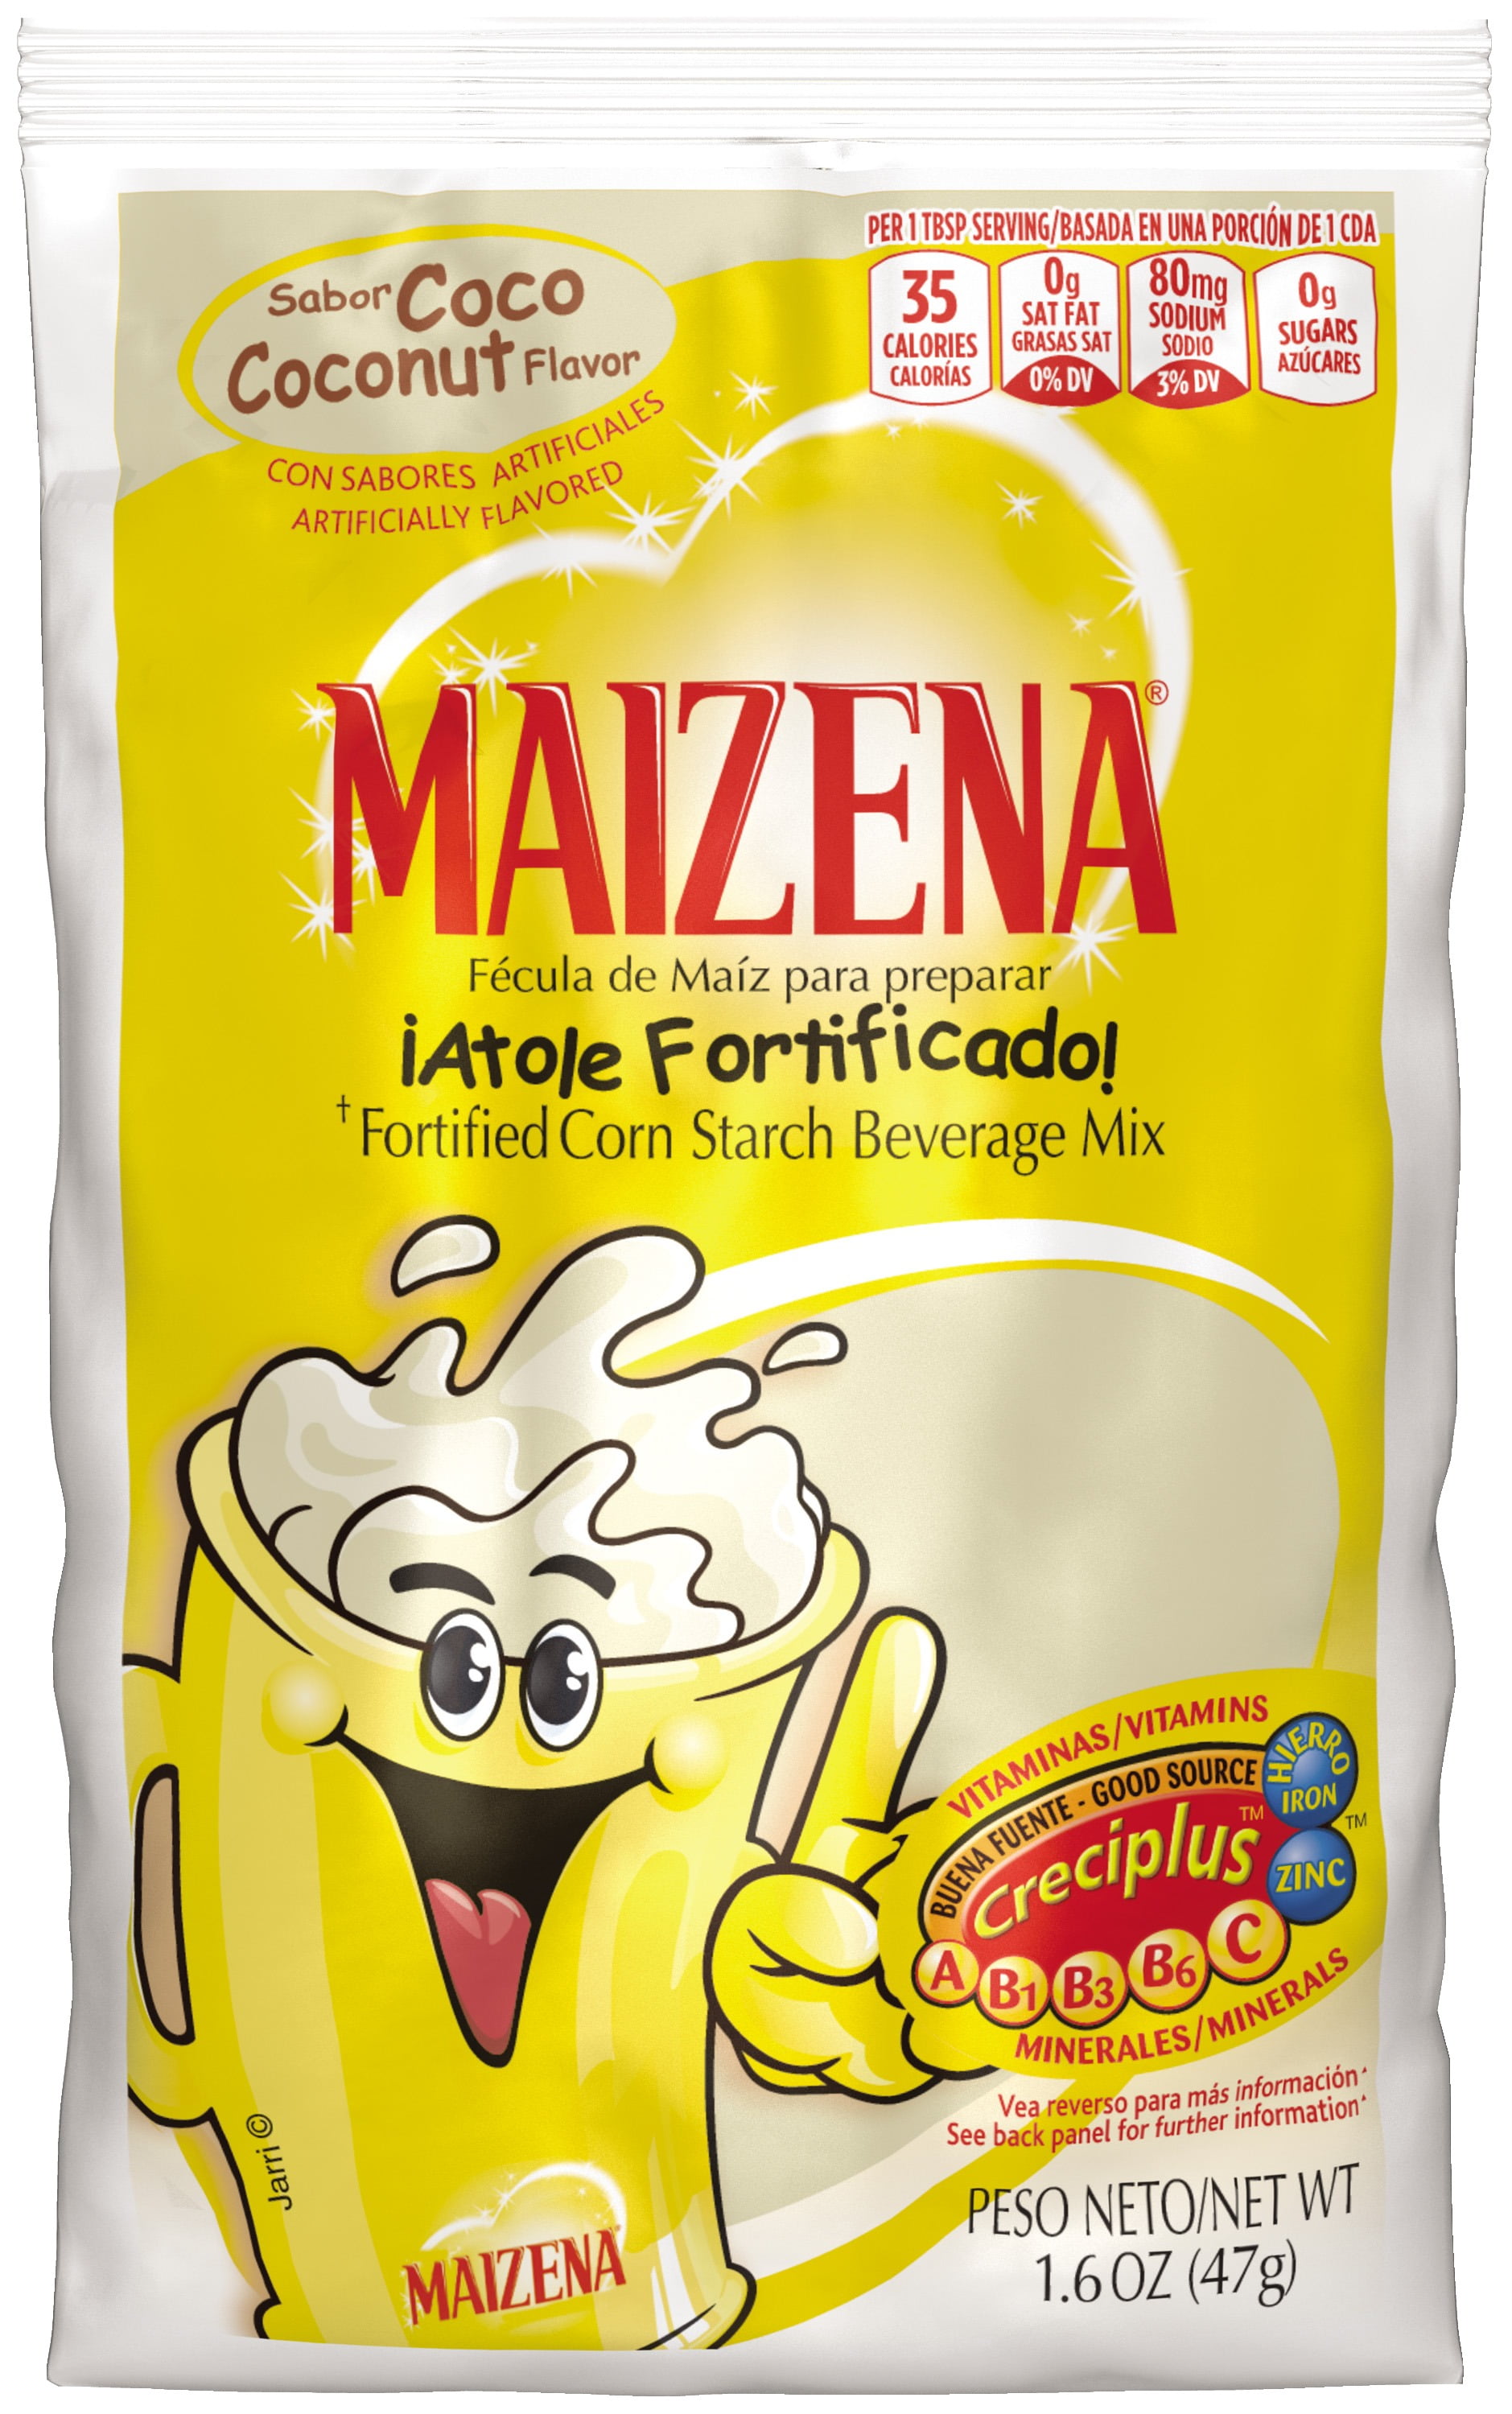 Maizena Coconut Flavor Atole is a delicious fortified cornstarch beverage m...